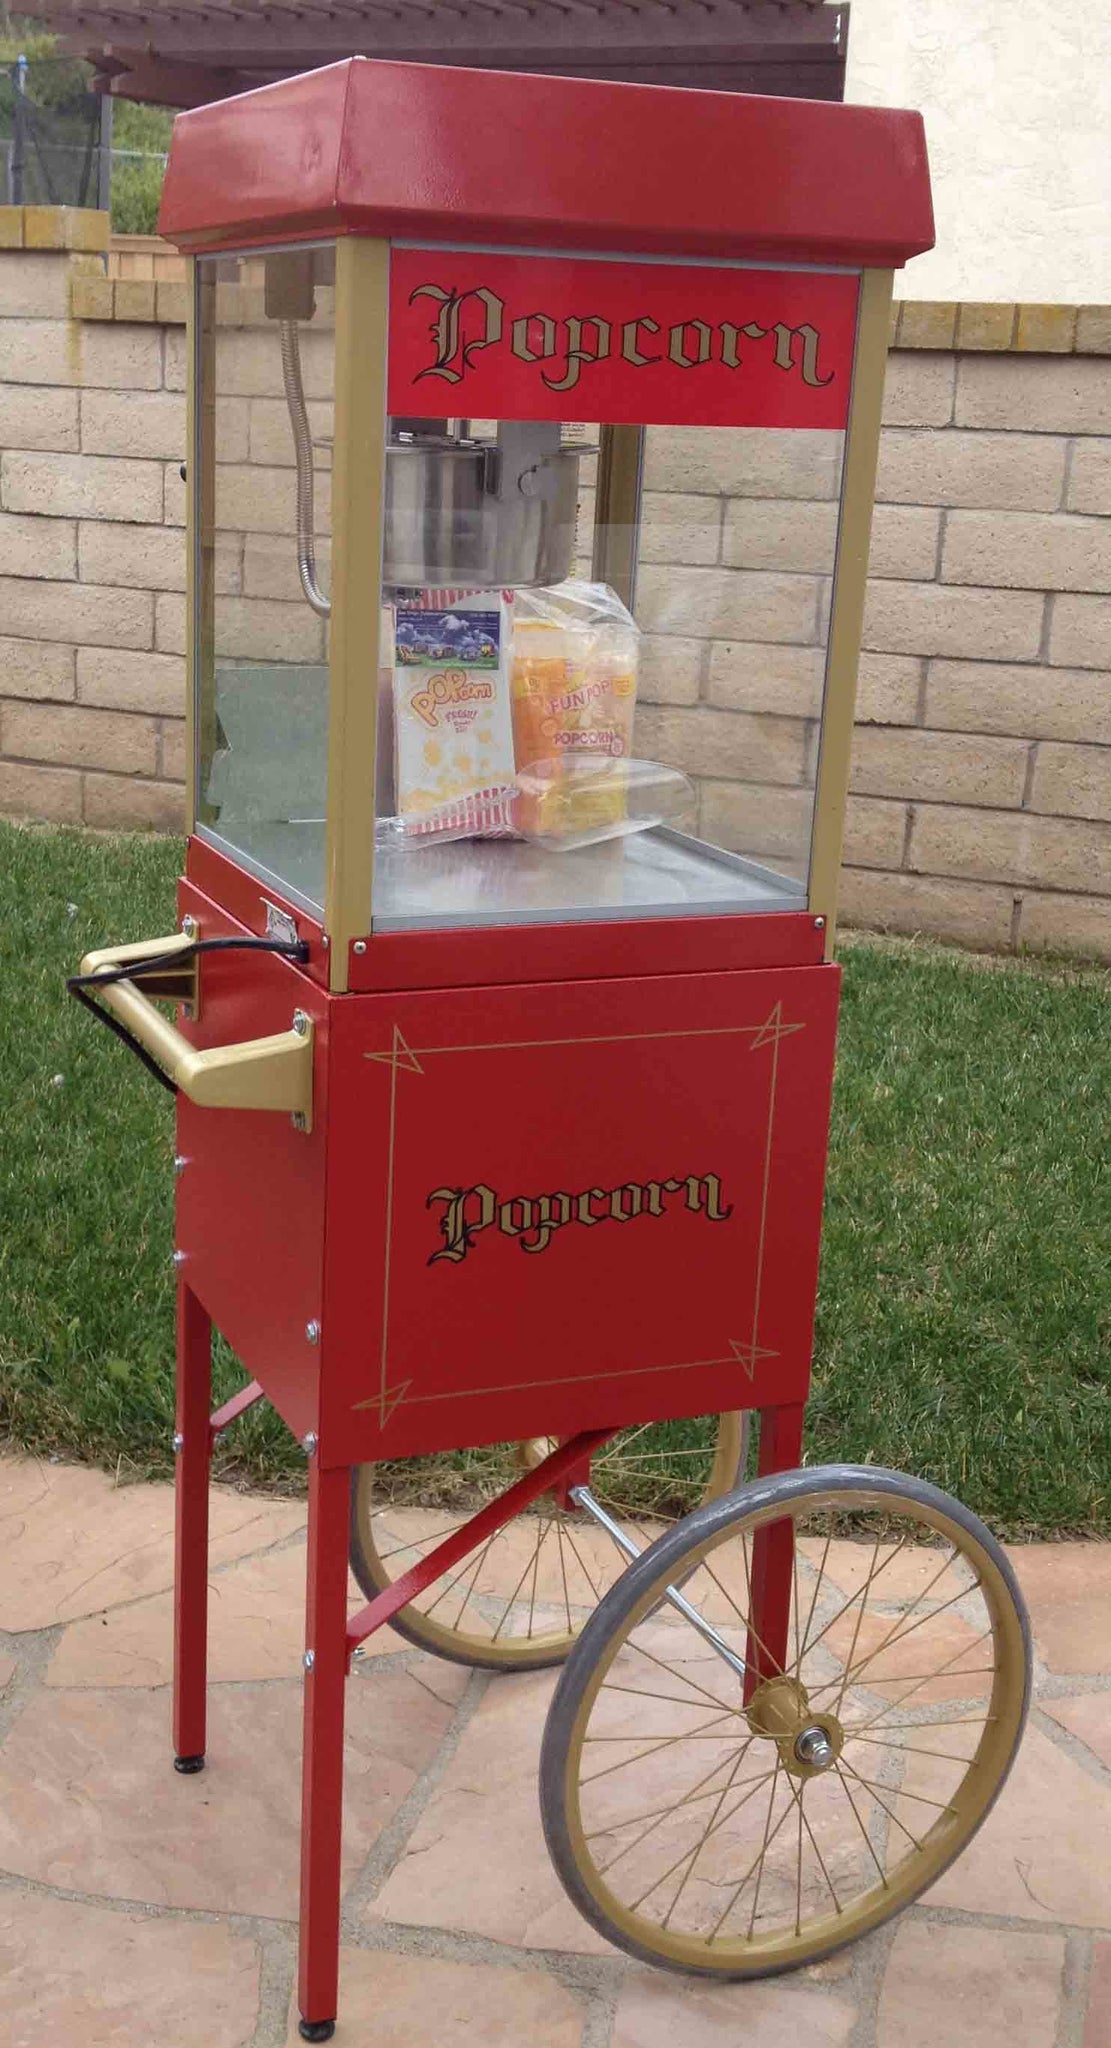 Popcorn maker on 2 wheel cart rentals Chicago IL  Where to rent popcorn  maker on 2 wheel cart in Skokie Illinois and Chicago IL